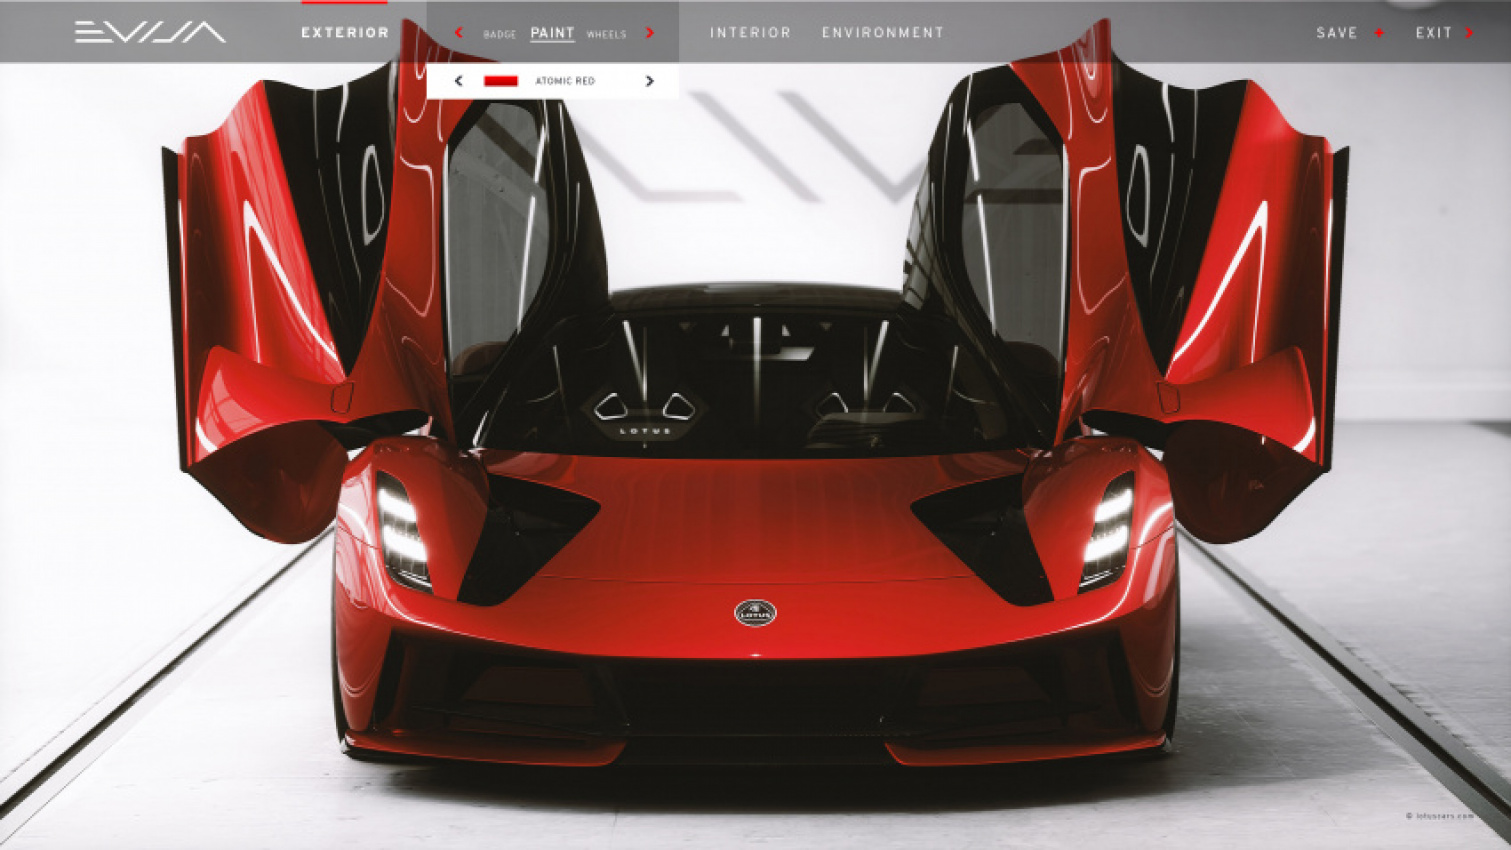 autos, cars, lotus, lotus reveals details of new evija via a digital configurator - check it out!